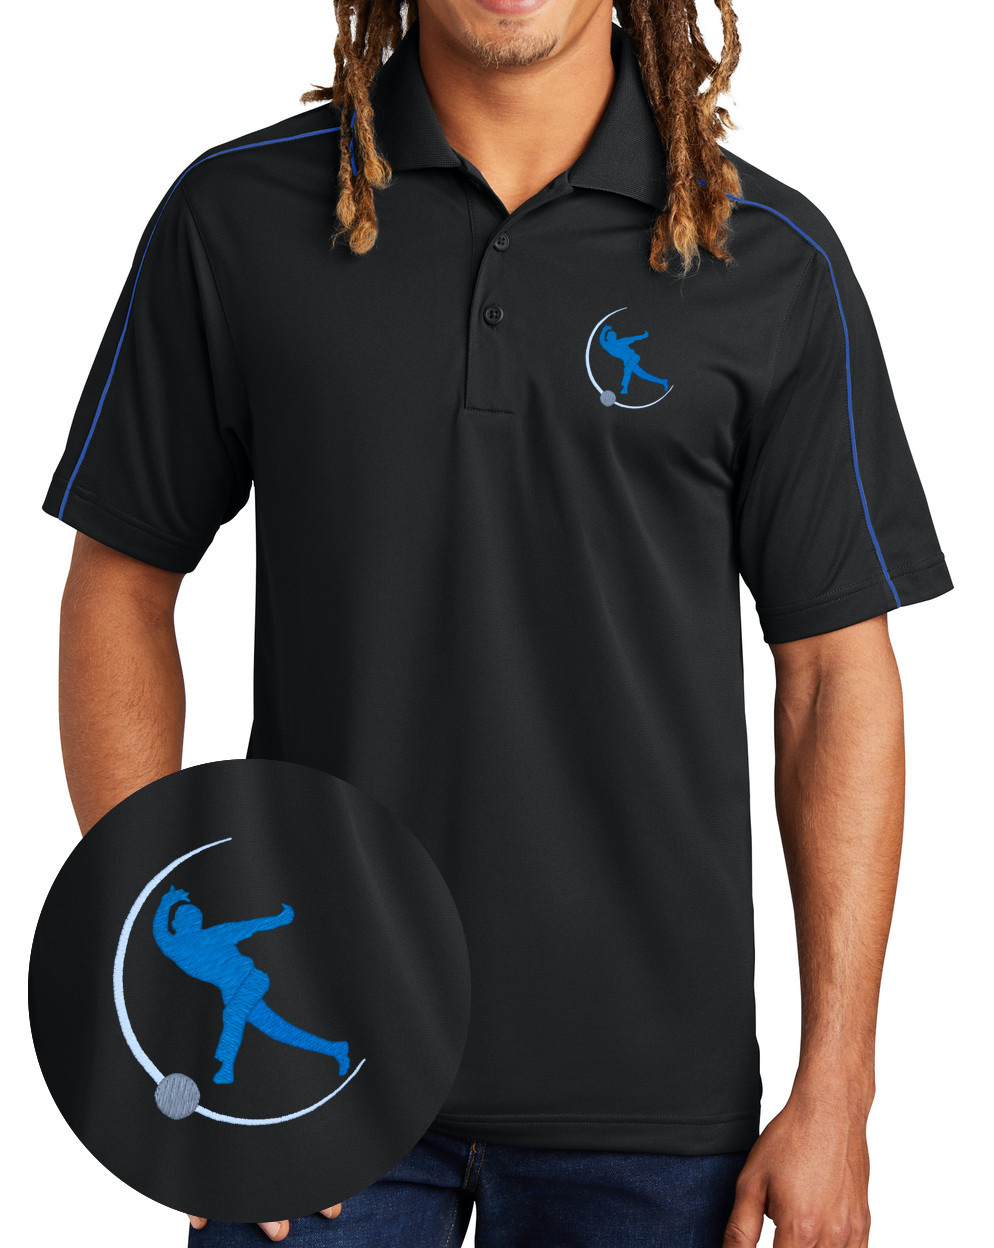 Brunswick Men's Method Performance Polo Bowling Shirt Dri-Fit Royal Blue 